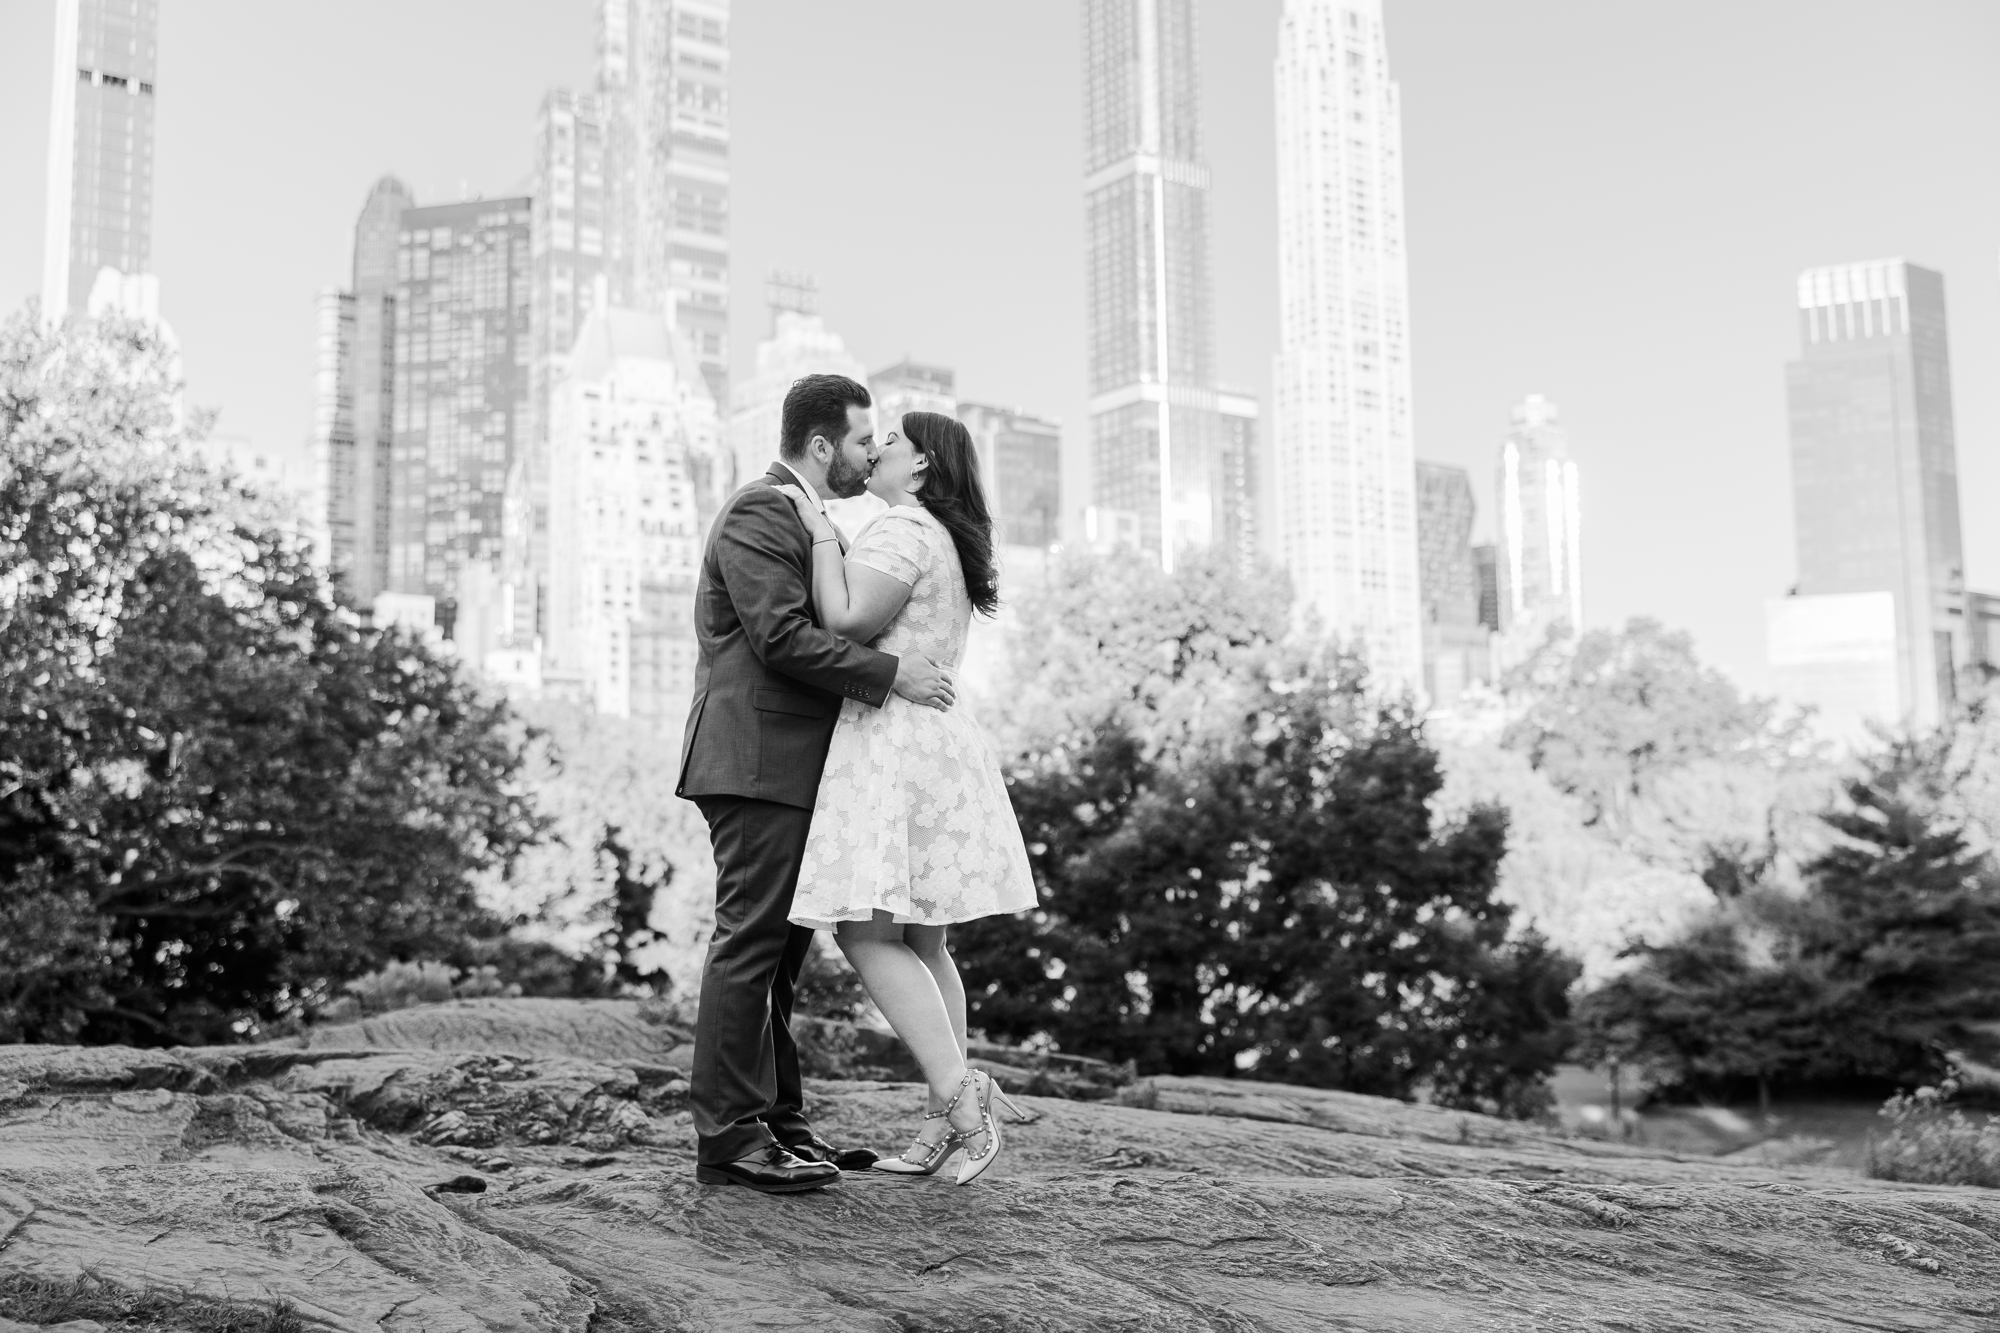 Unique Engagement Photos with Landmarks, New York